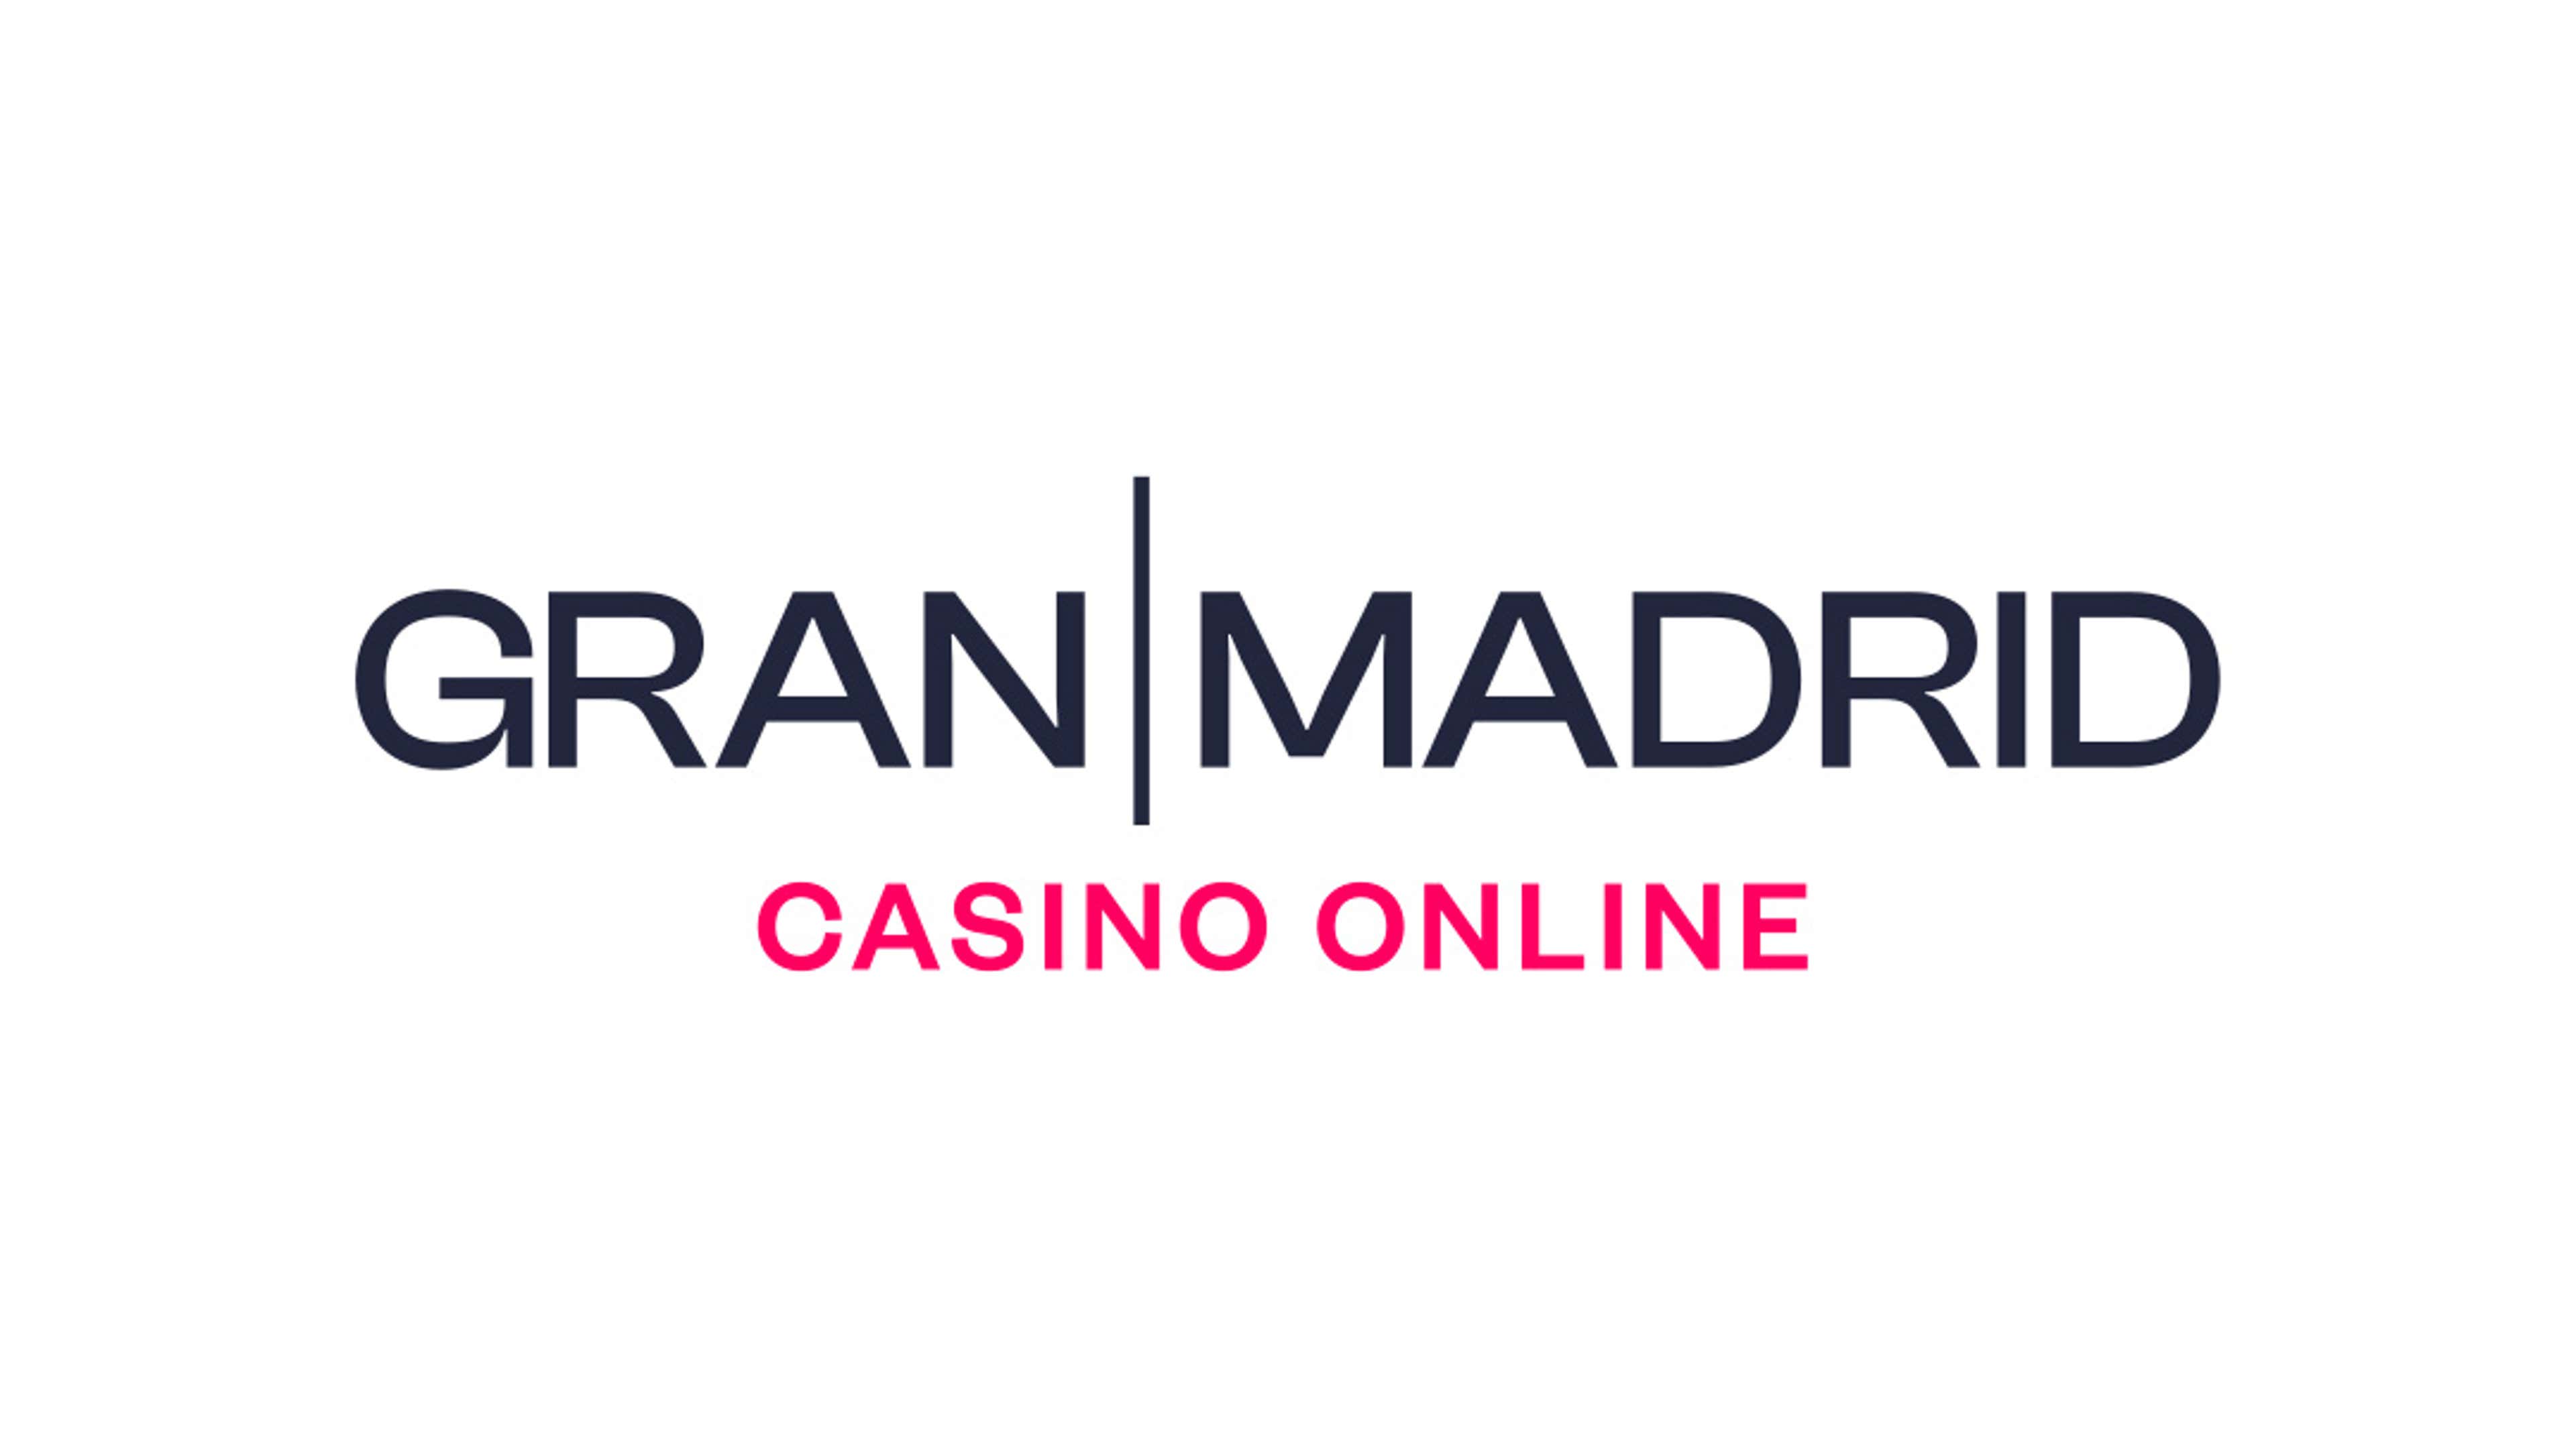 Casino gran madrid online opiniones